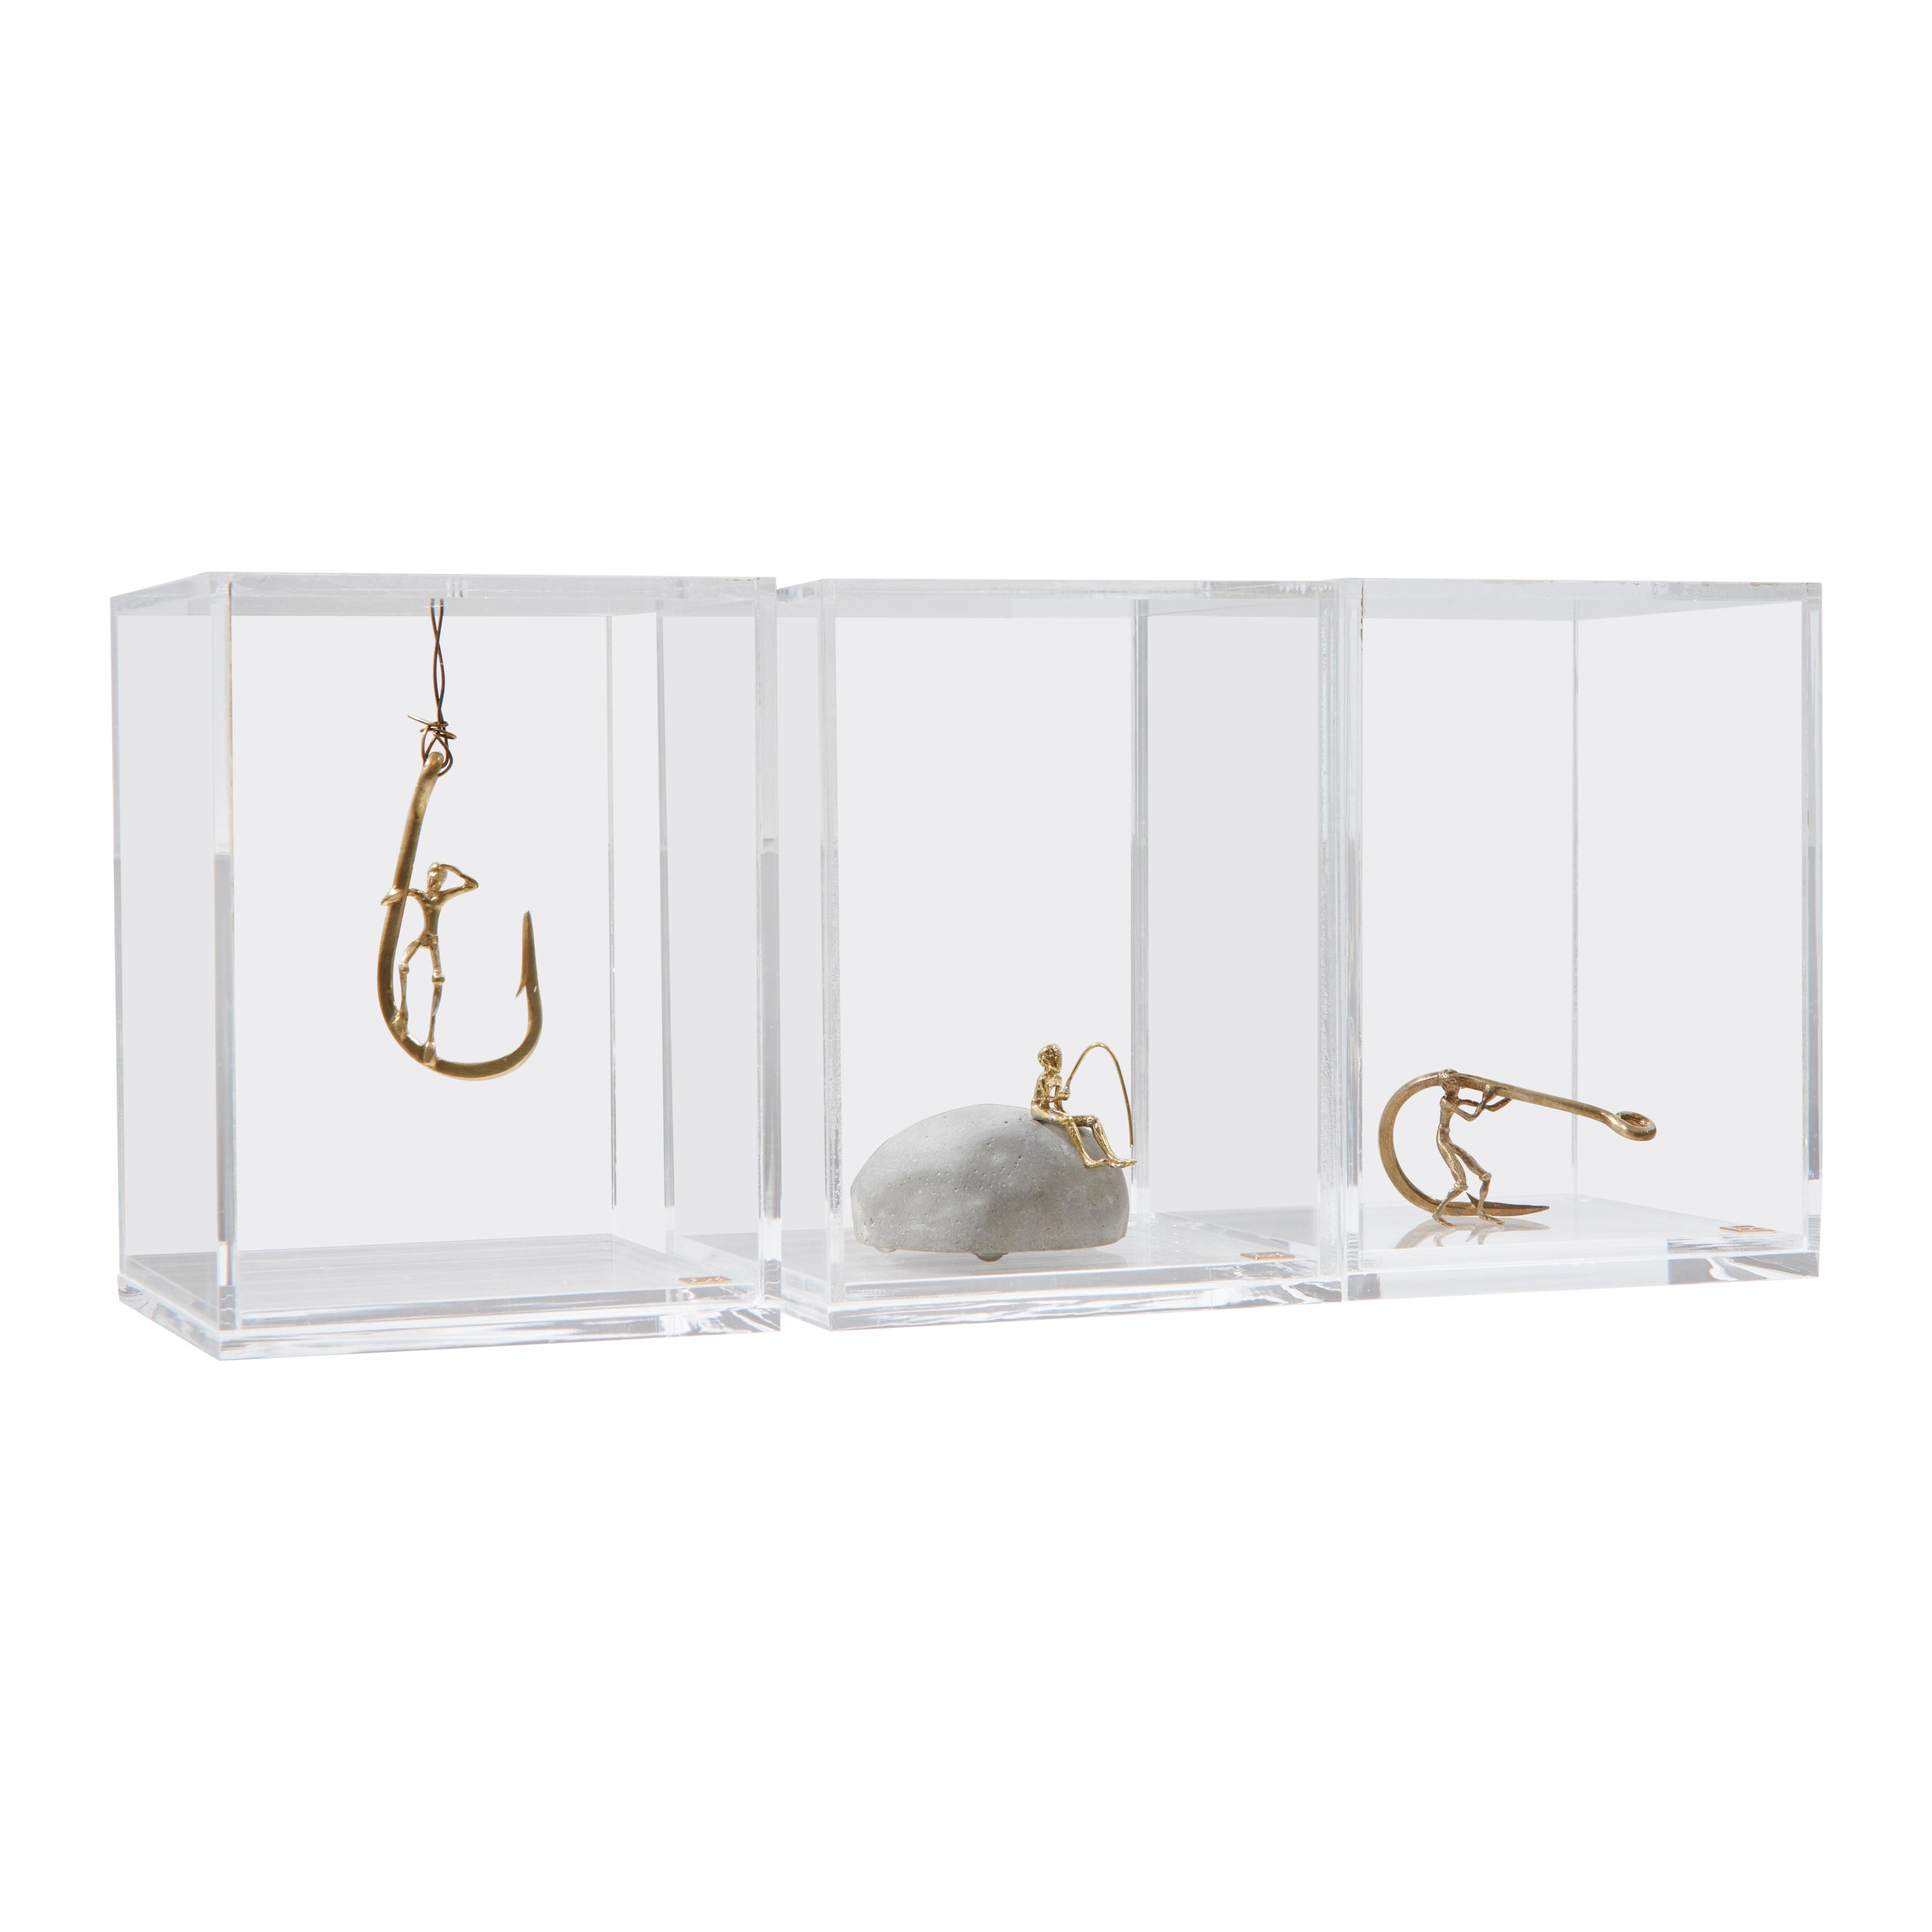 Sculpture Series, Pescador 'Fisherman' Brass Sculptures, Acrylic Box 'Set' For Sale